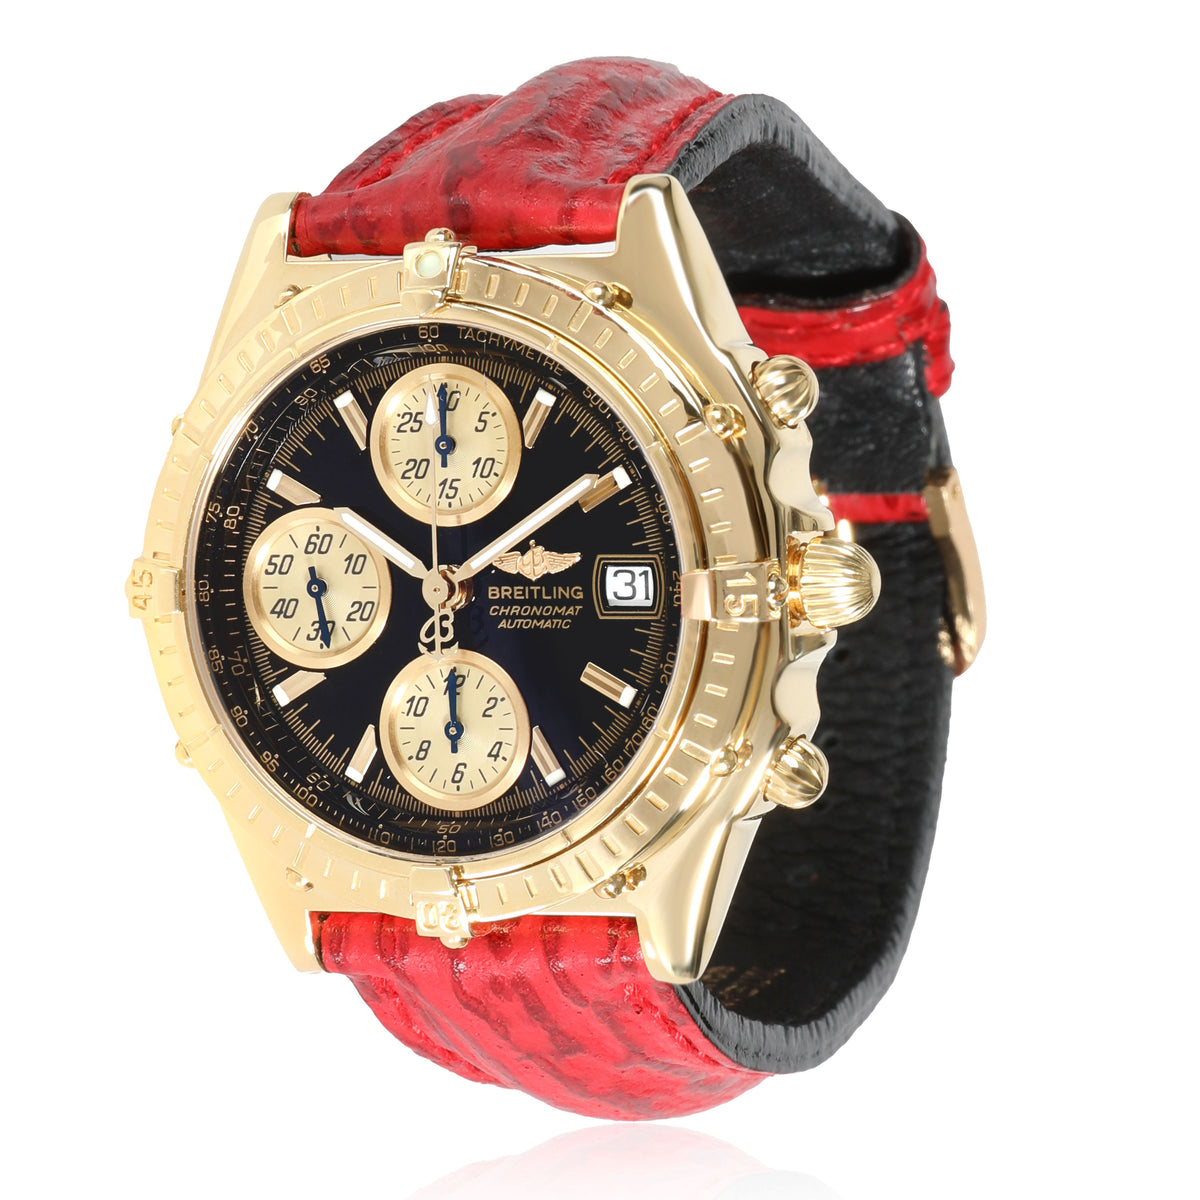 Breitling Chronomat K13050.1 Men's Watch in 18kt Yellow Gold